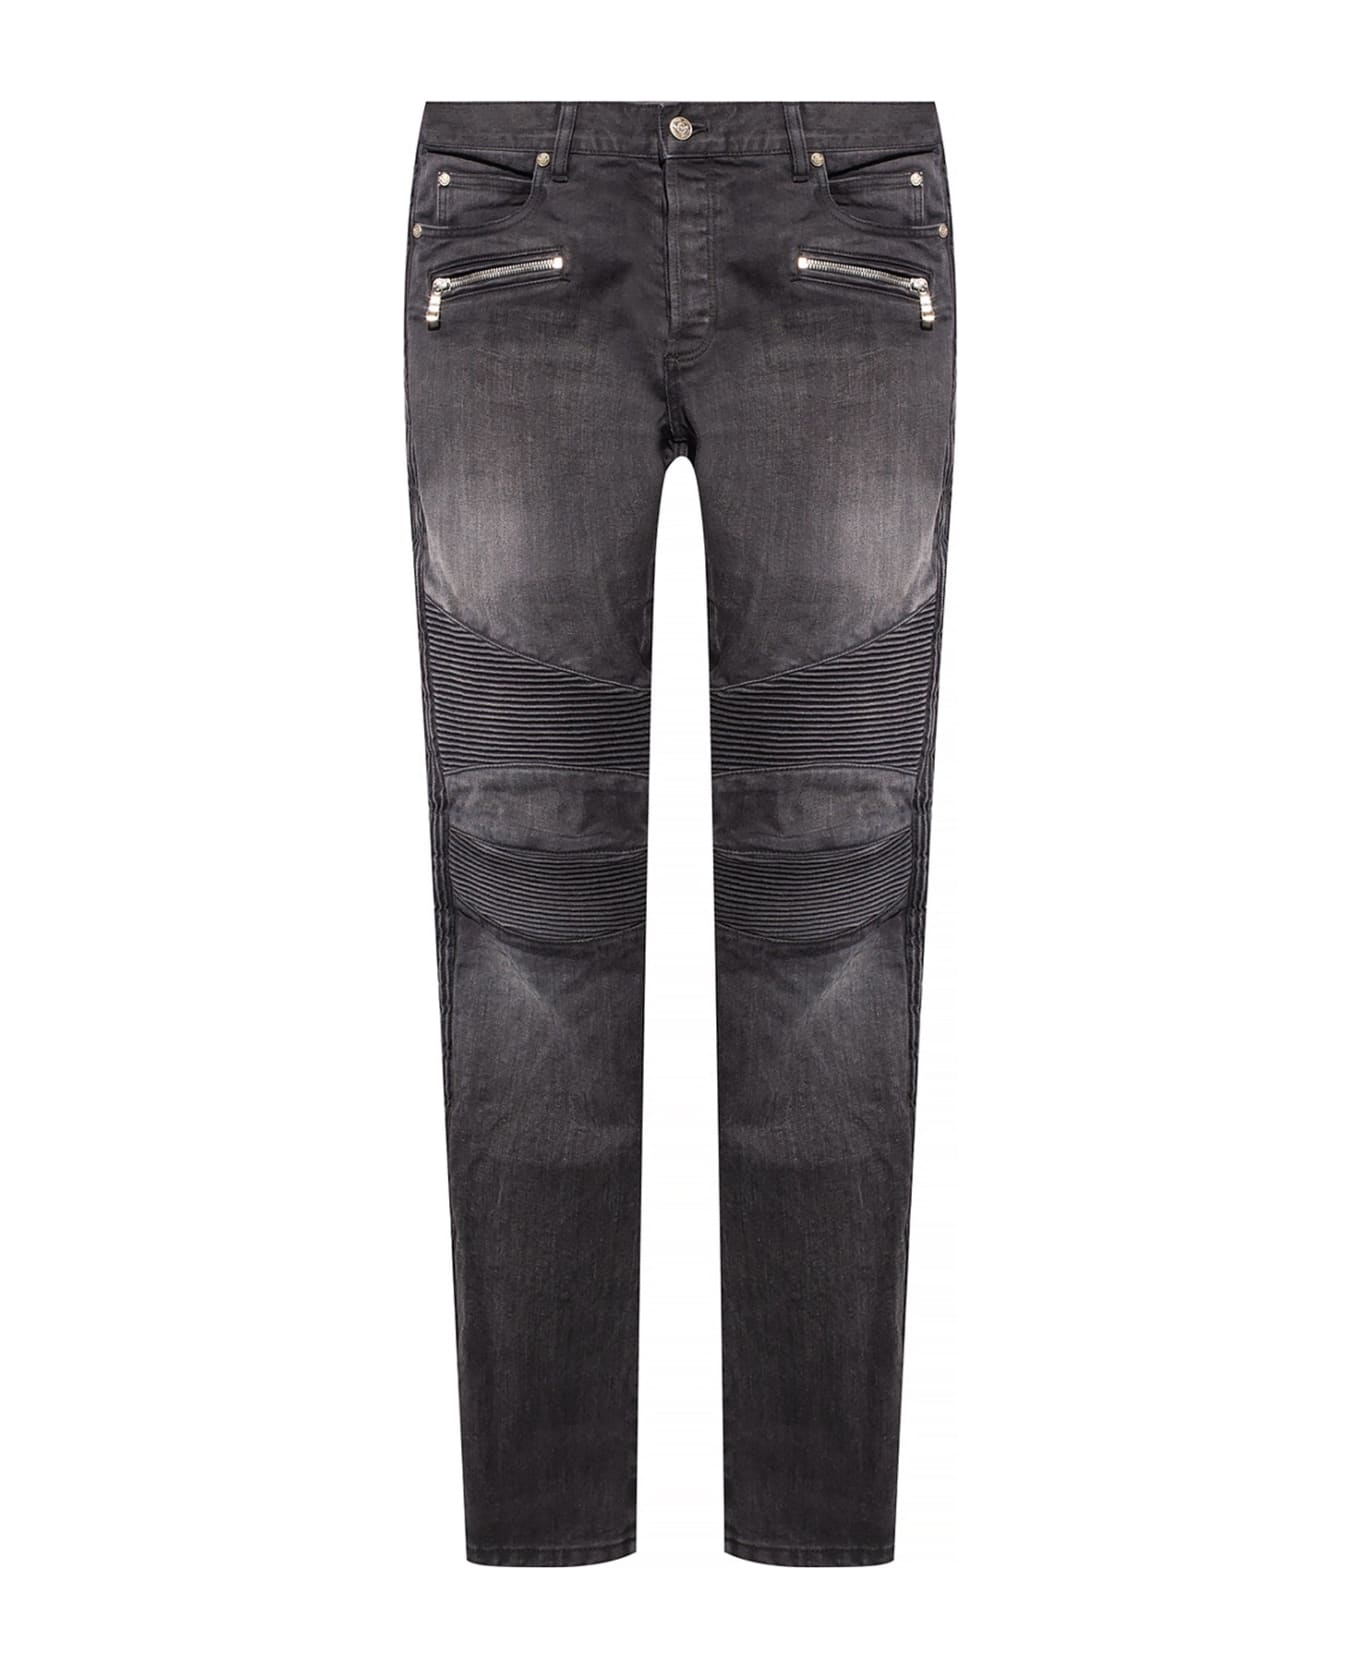 Balmain Cotton Jeans - Gray デニム